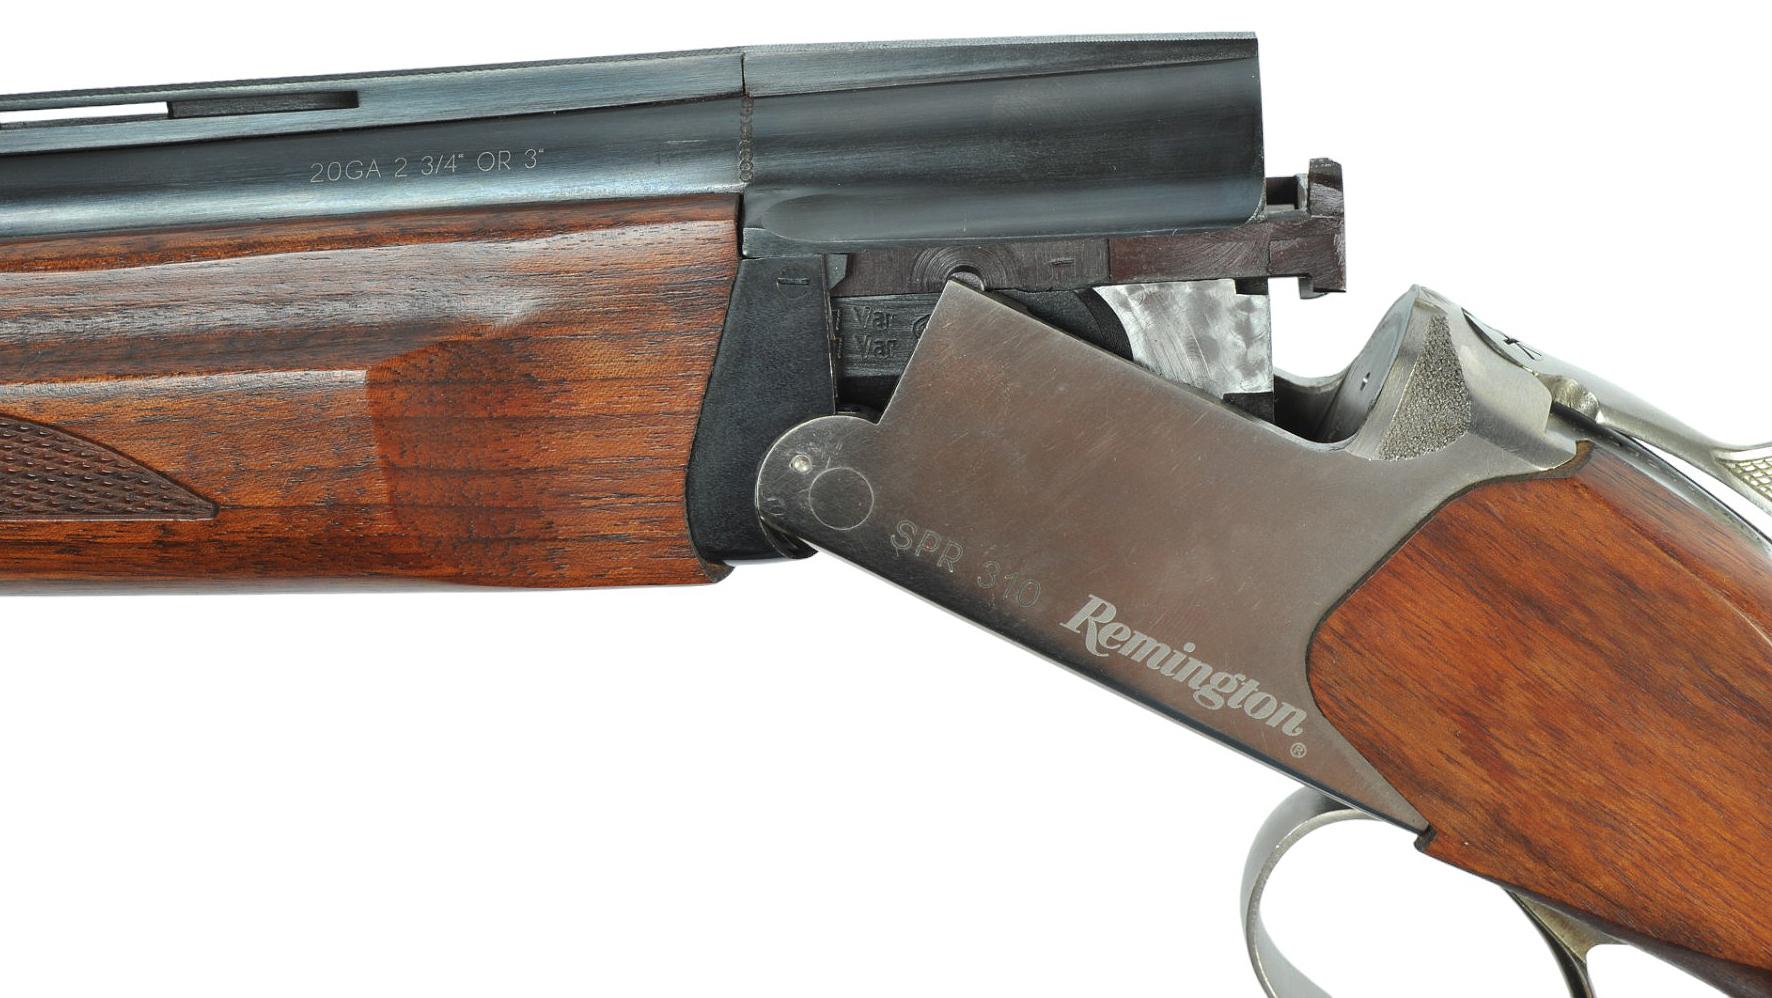 Baikal/Remington SPR 310 20 Gauge Double-barrel Shotgun FFL Required: 072779486R  (K1S1)